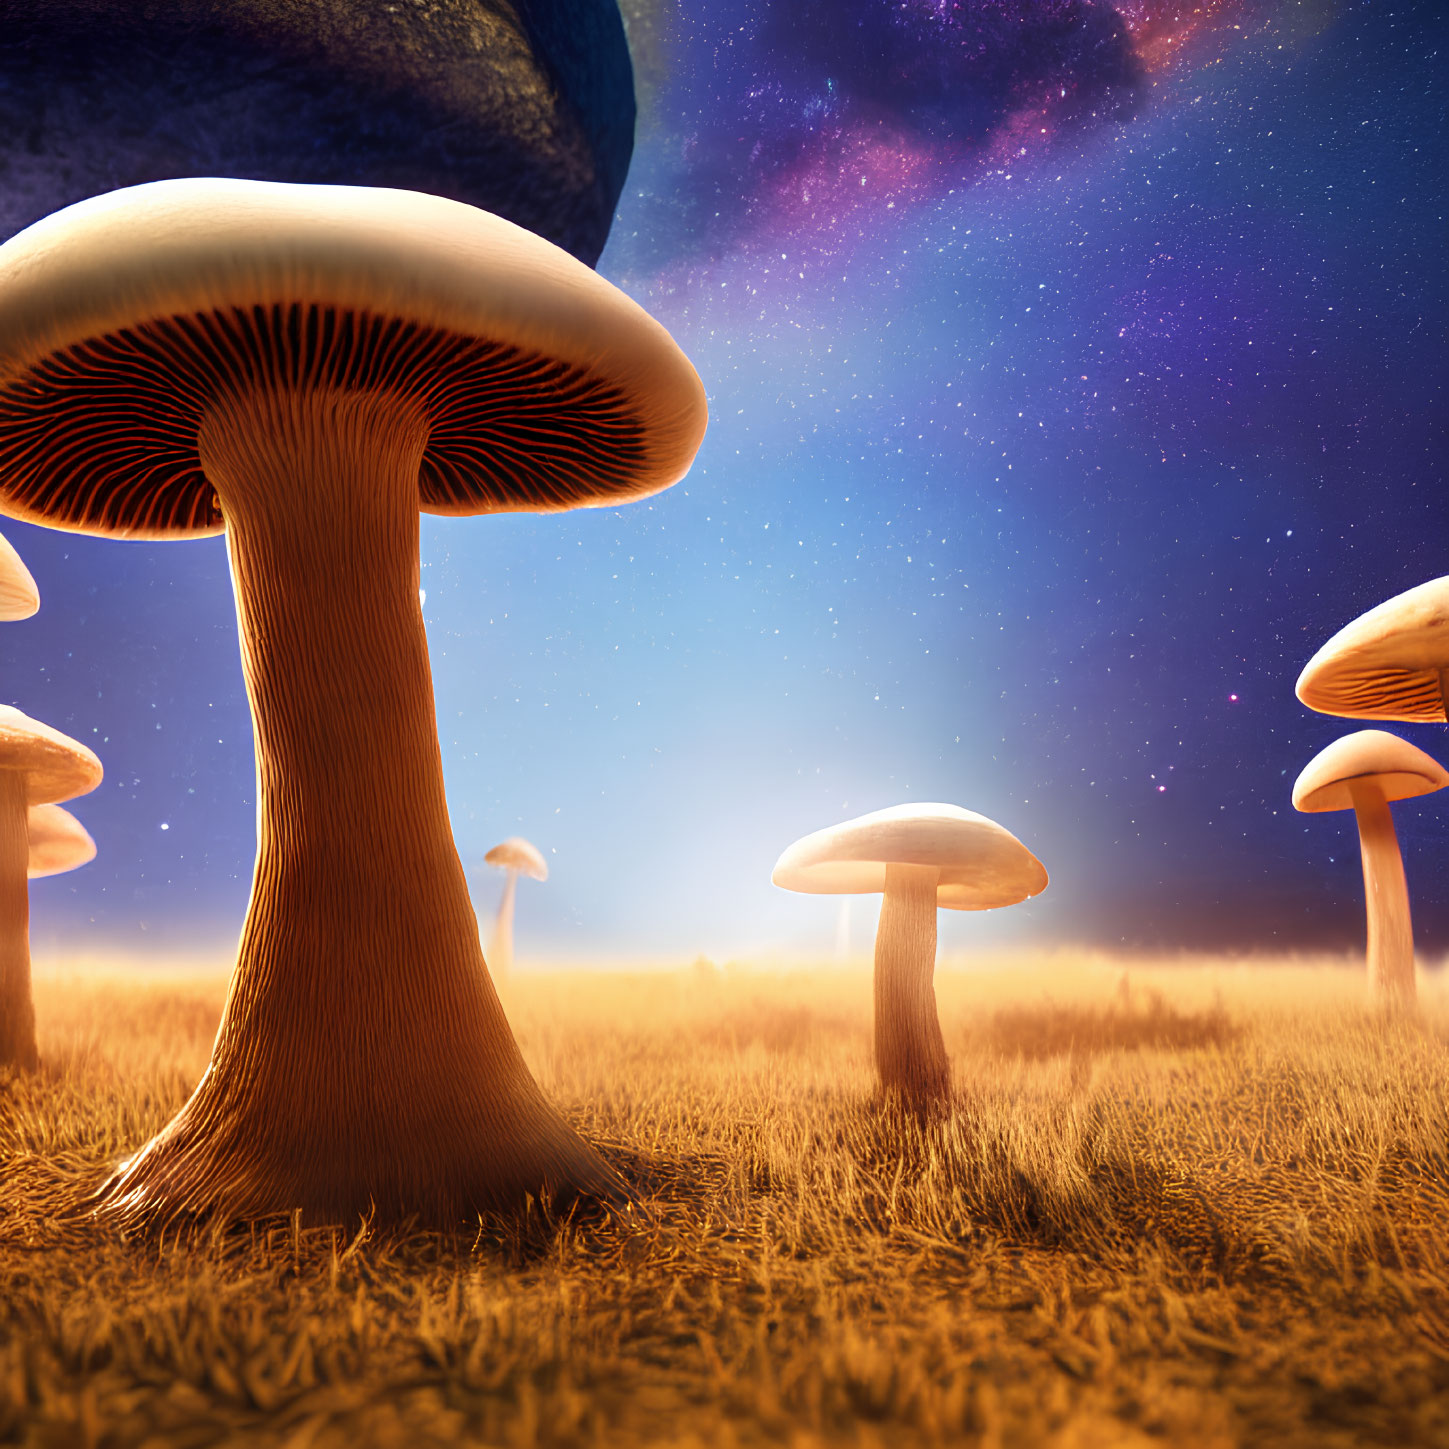 Surreal Landscape: Oversized Mushrooms, Starry Night Sky